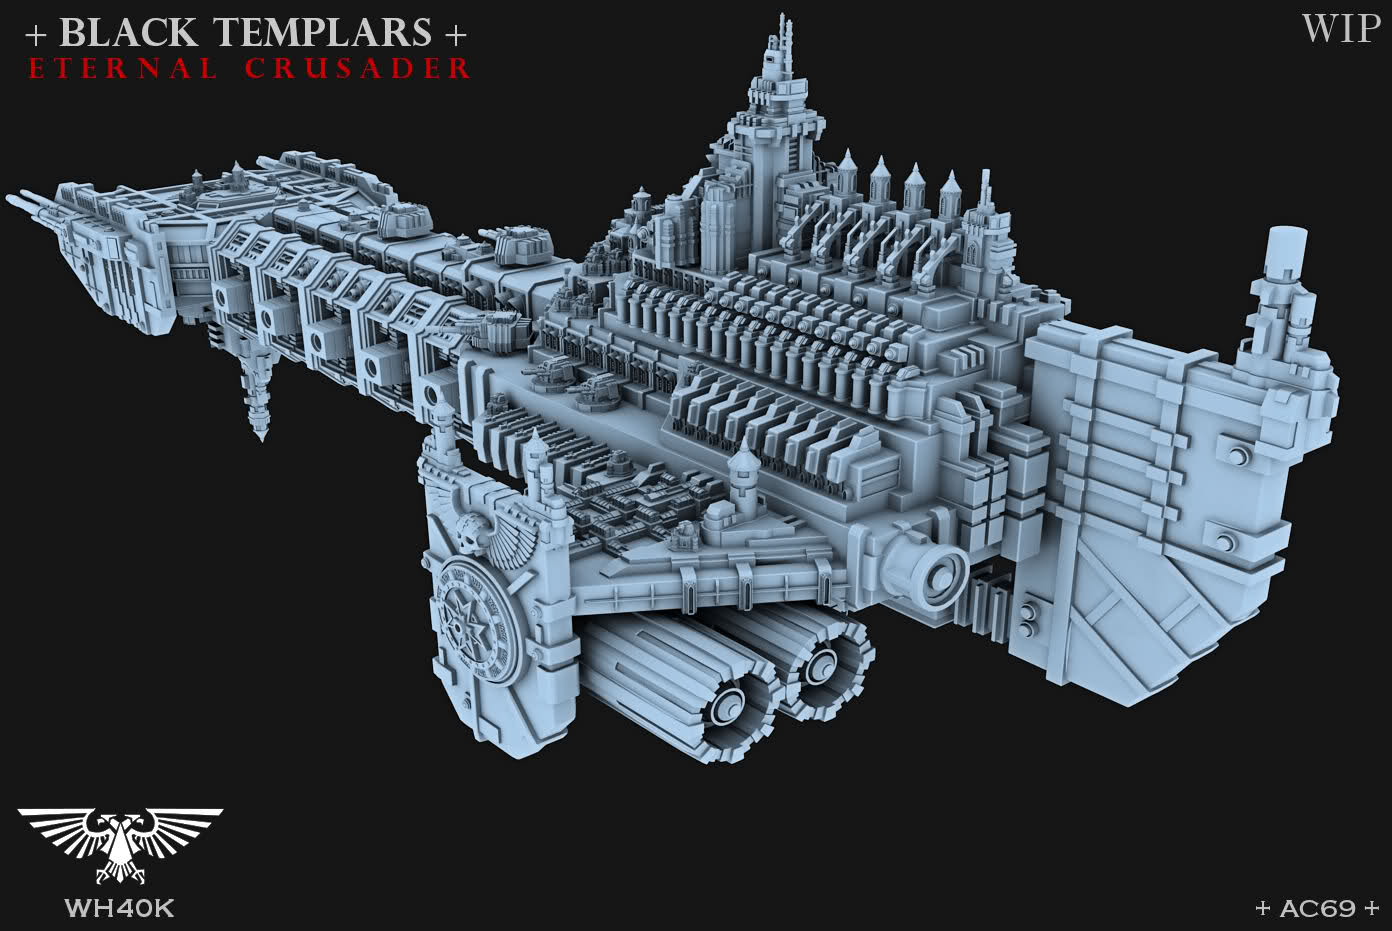 more ships image - Warhammer 40K Fan Group - Mod DB